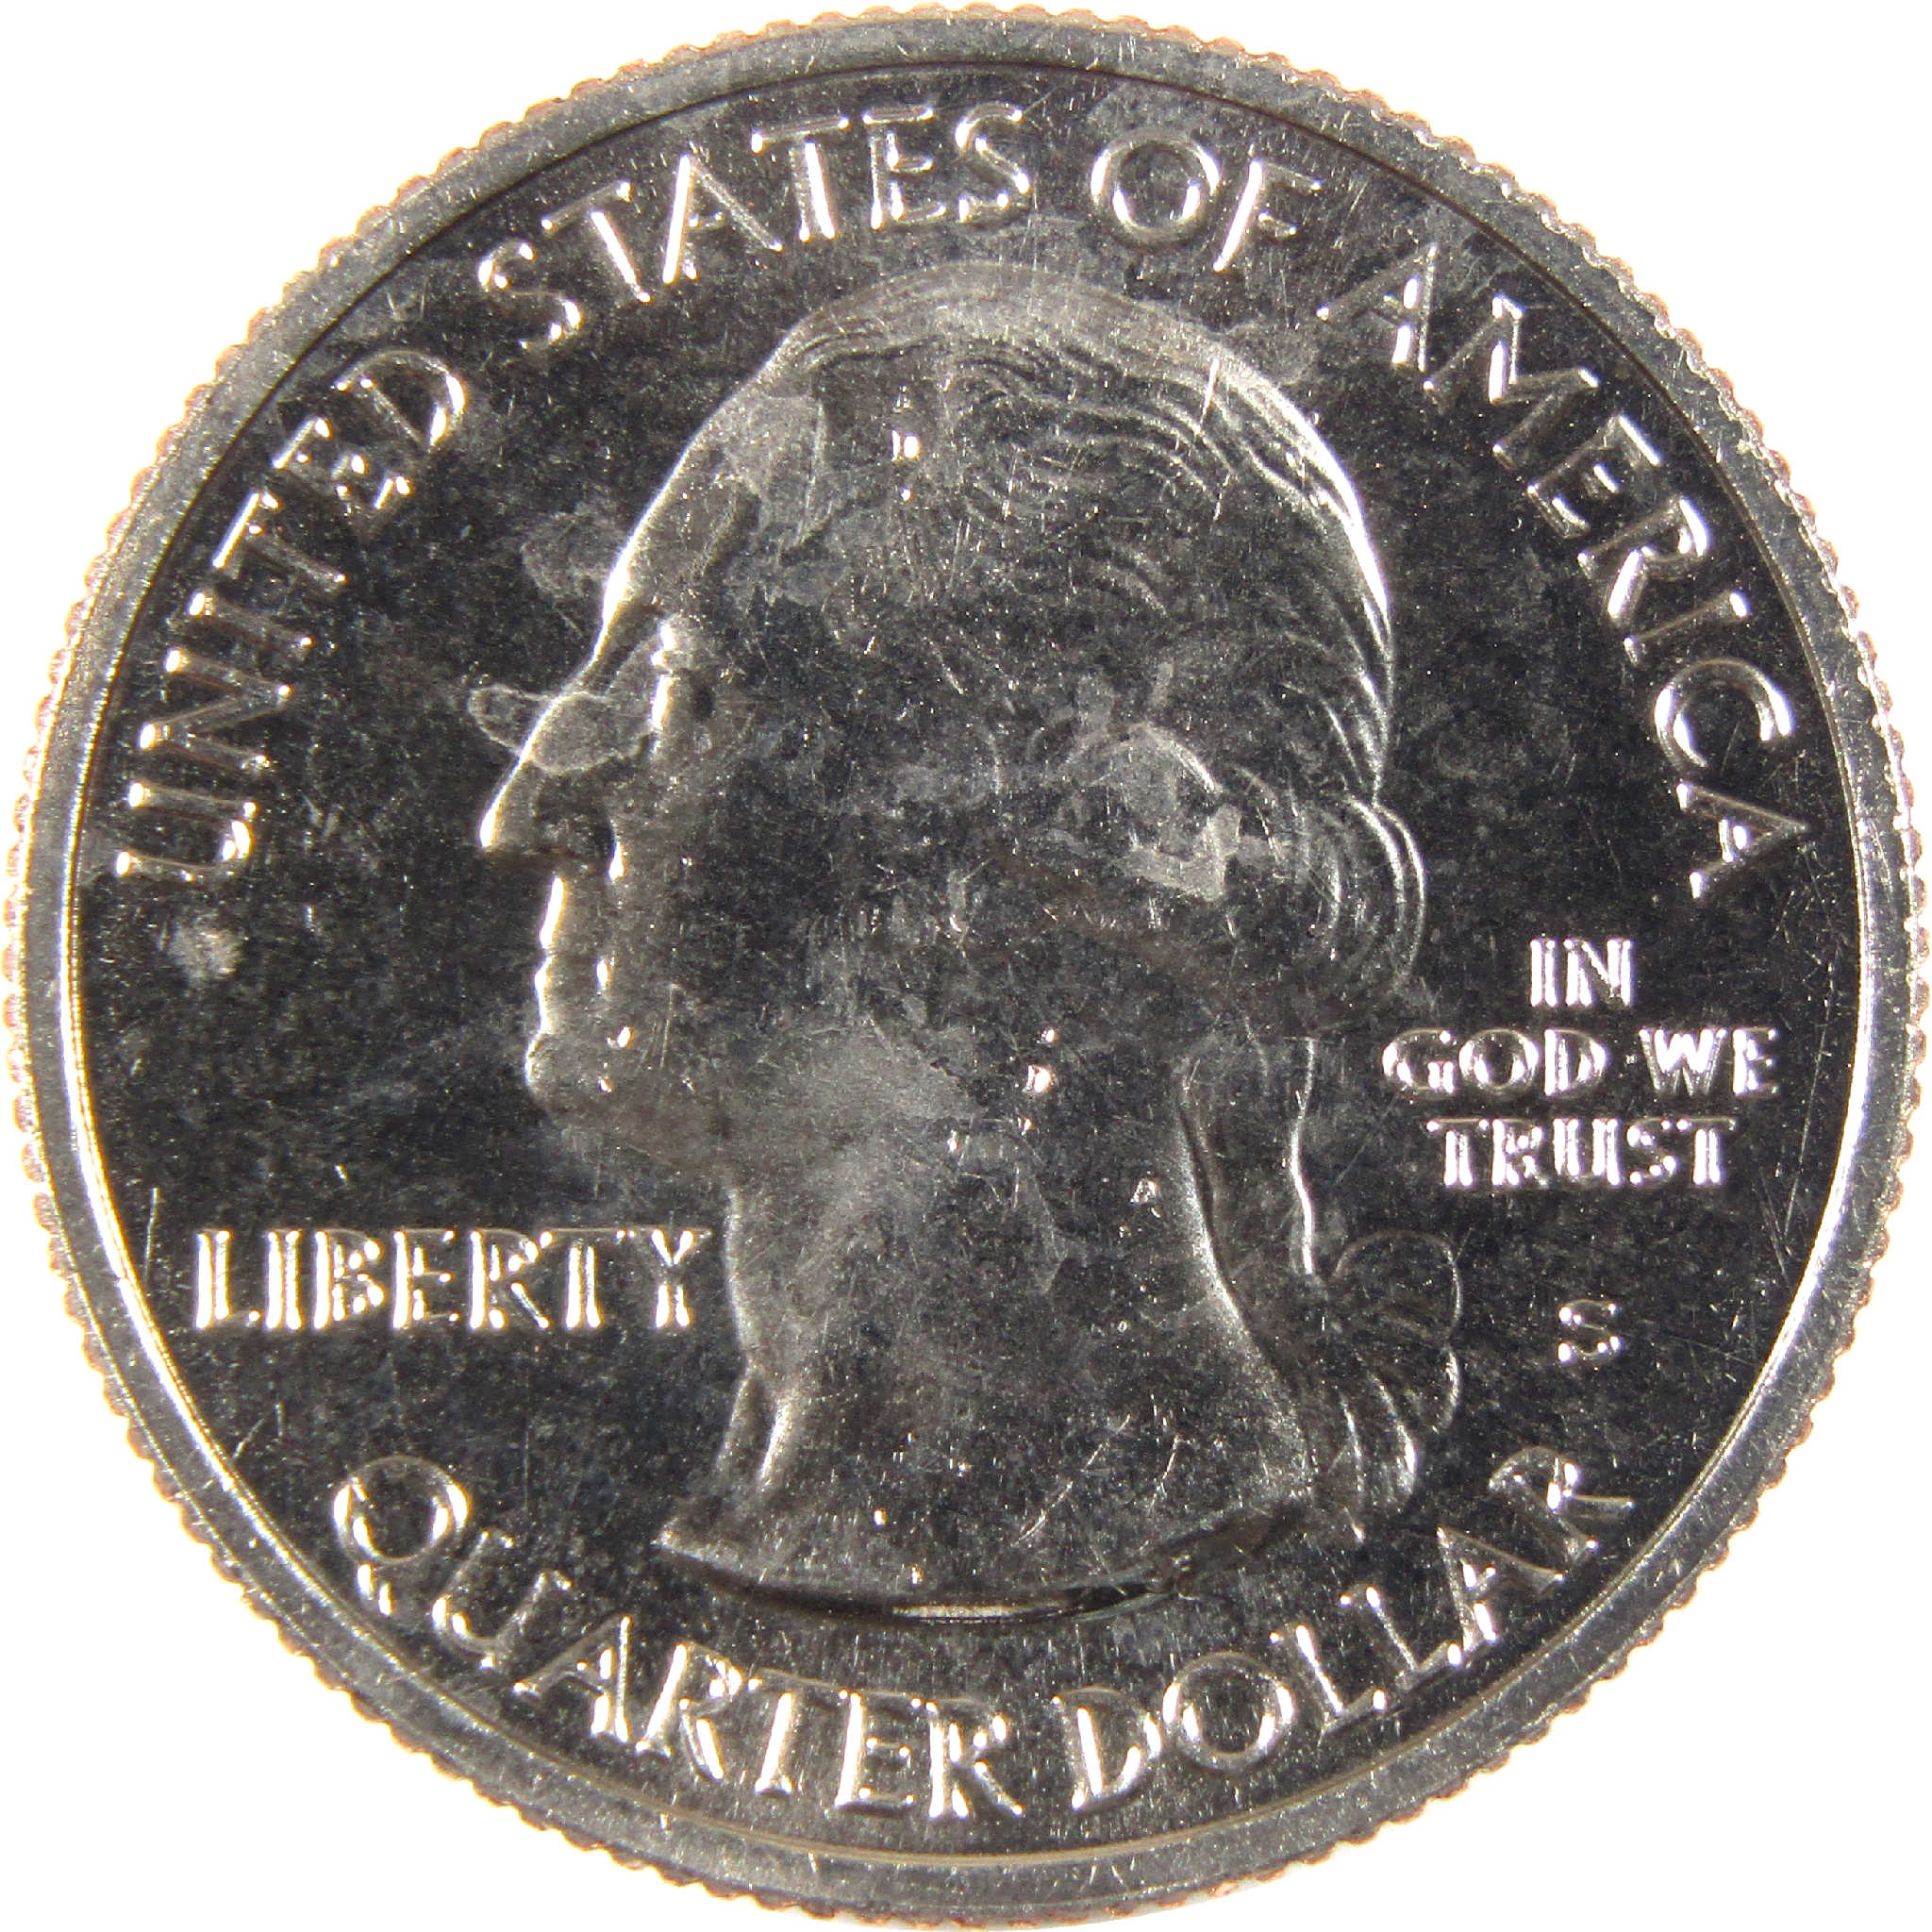 2014 S Shenandoah National Park Quarter Uncirculated Clad 25c Coin